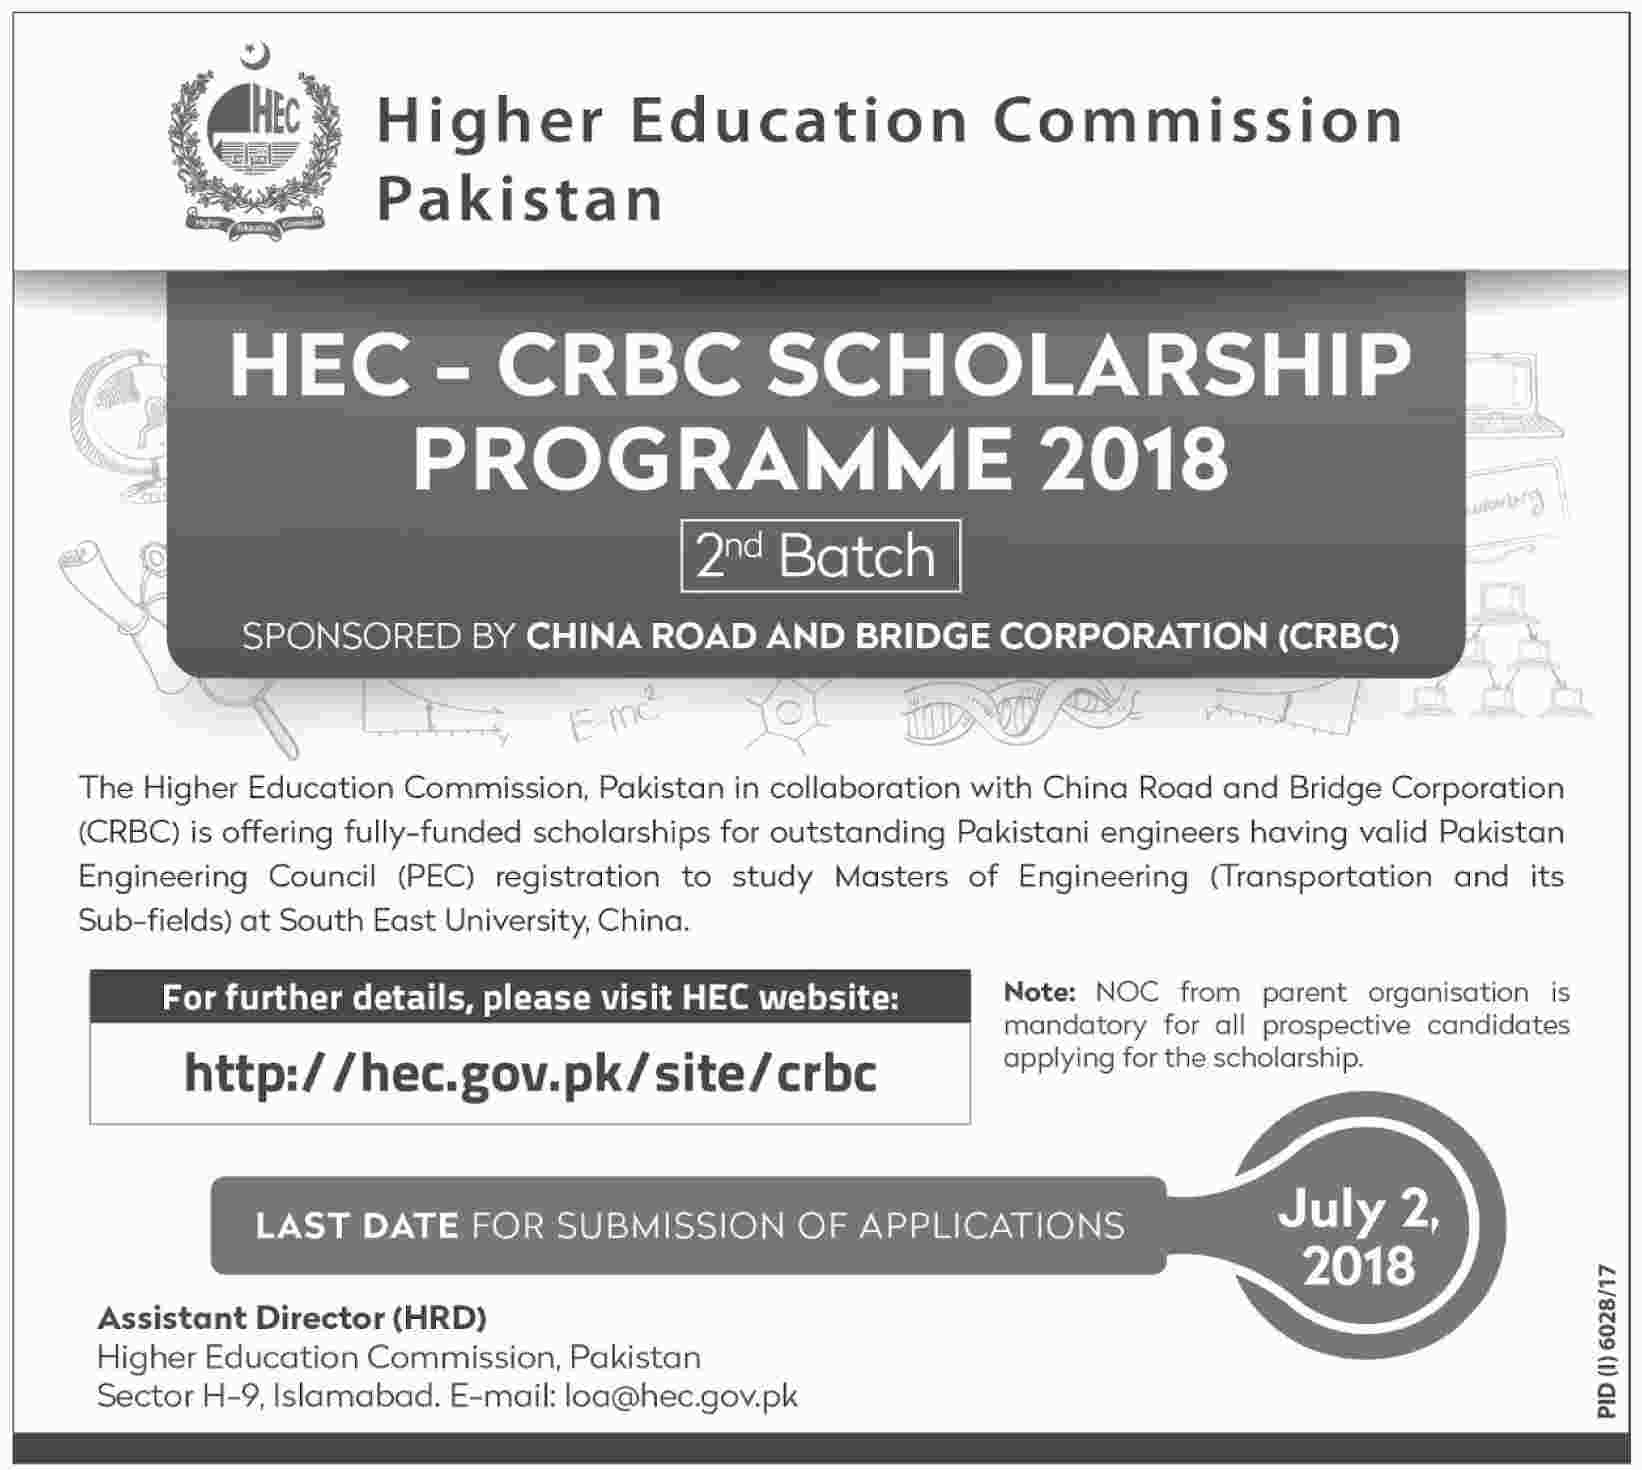 HEC - CRBC Scholarship Programme 2018 (2nd Batch)